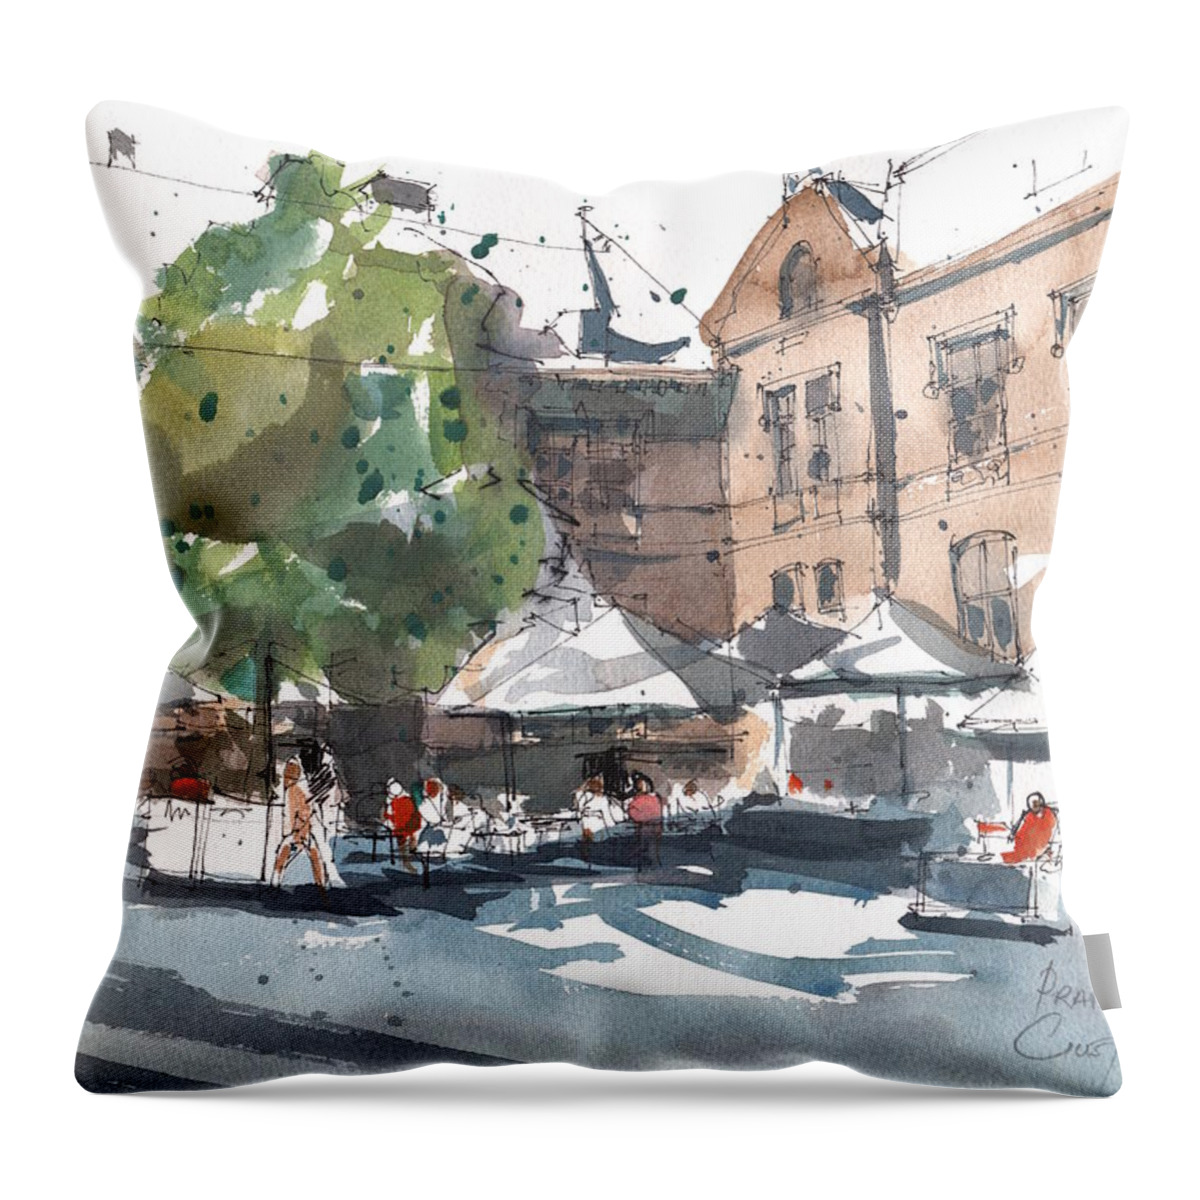 Urban Landscape Throw Pillow featuring the painting Prague Piazza by Gaston McKenzie